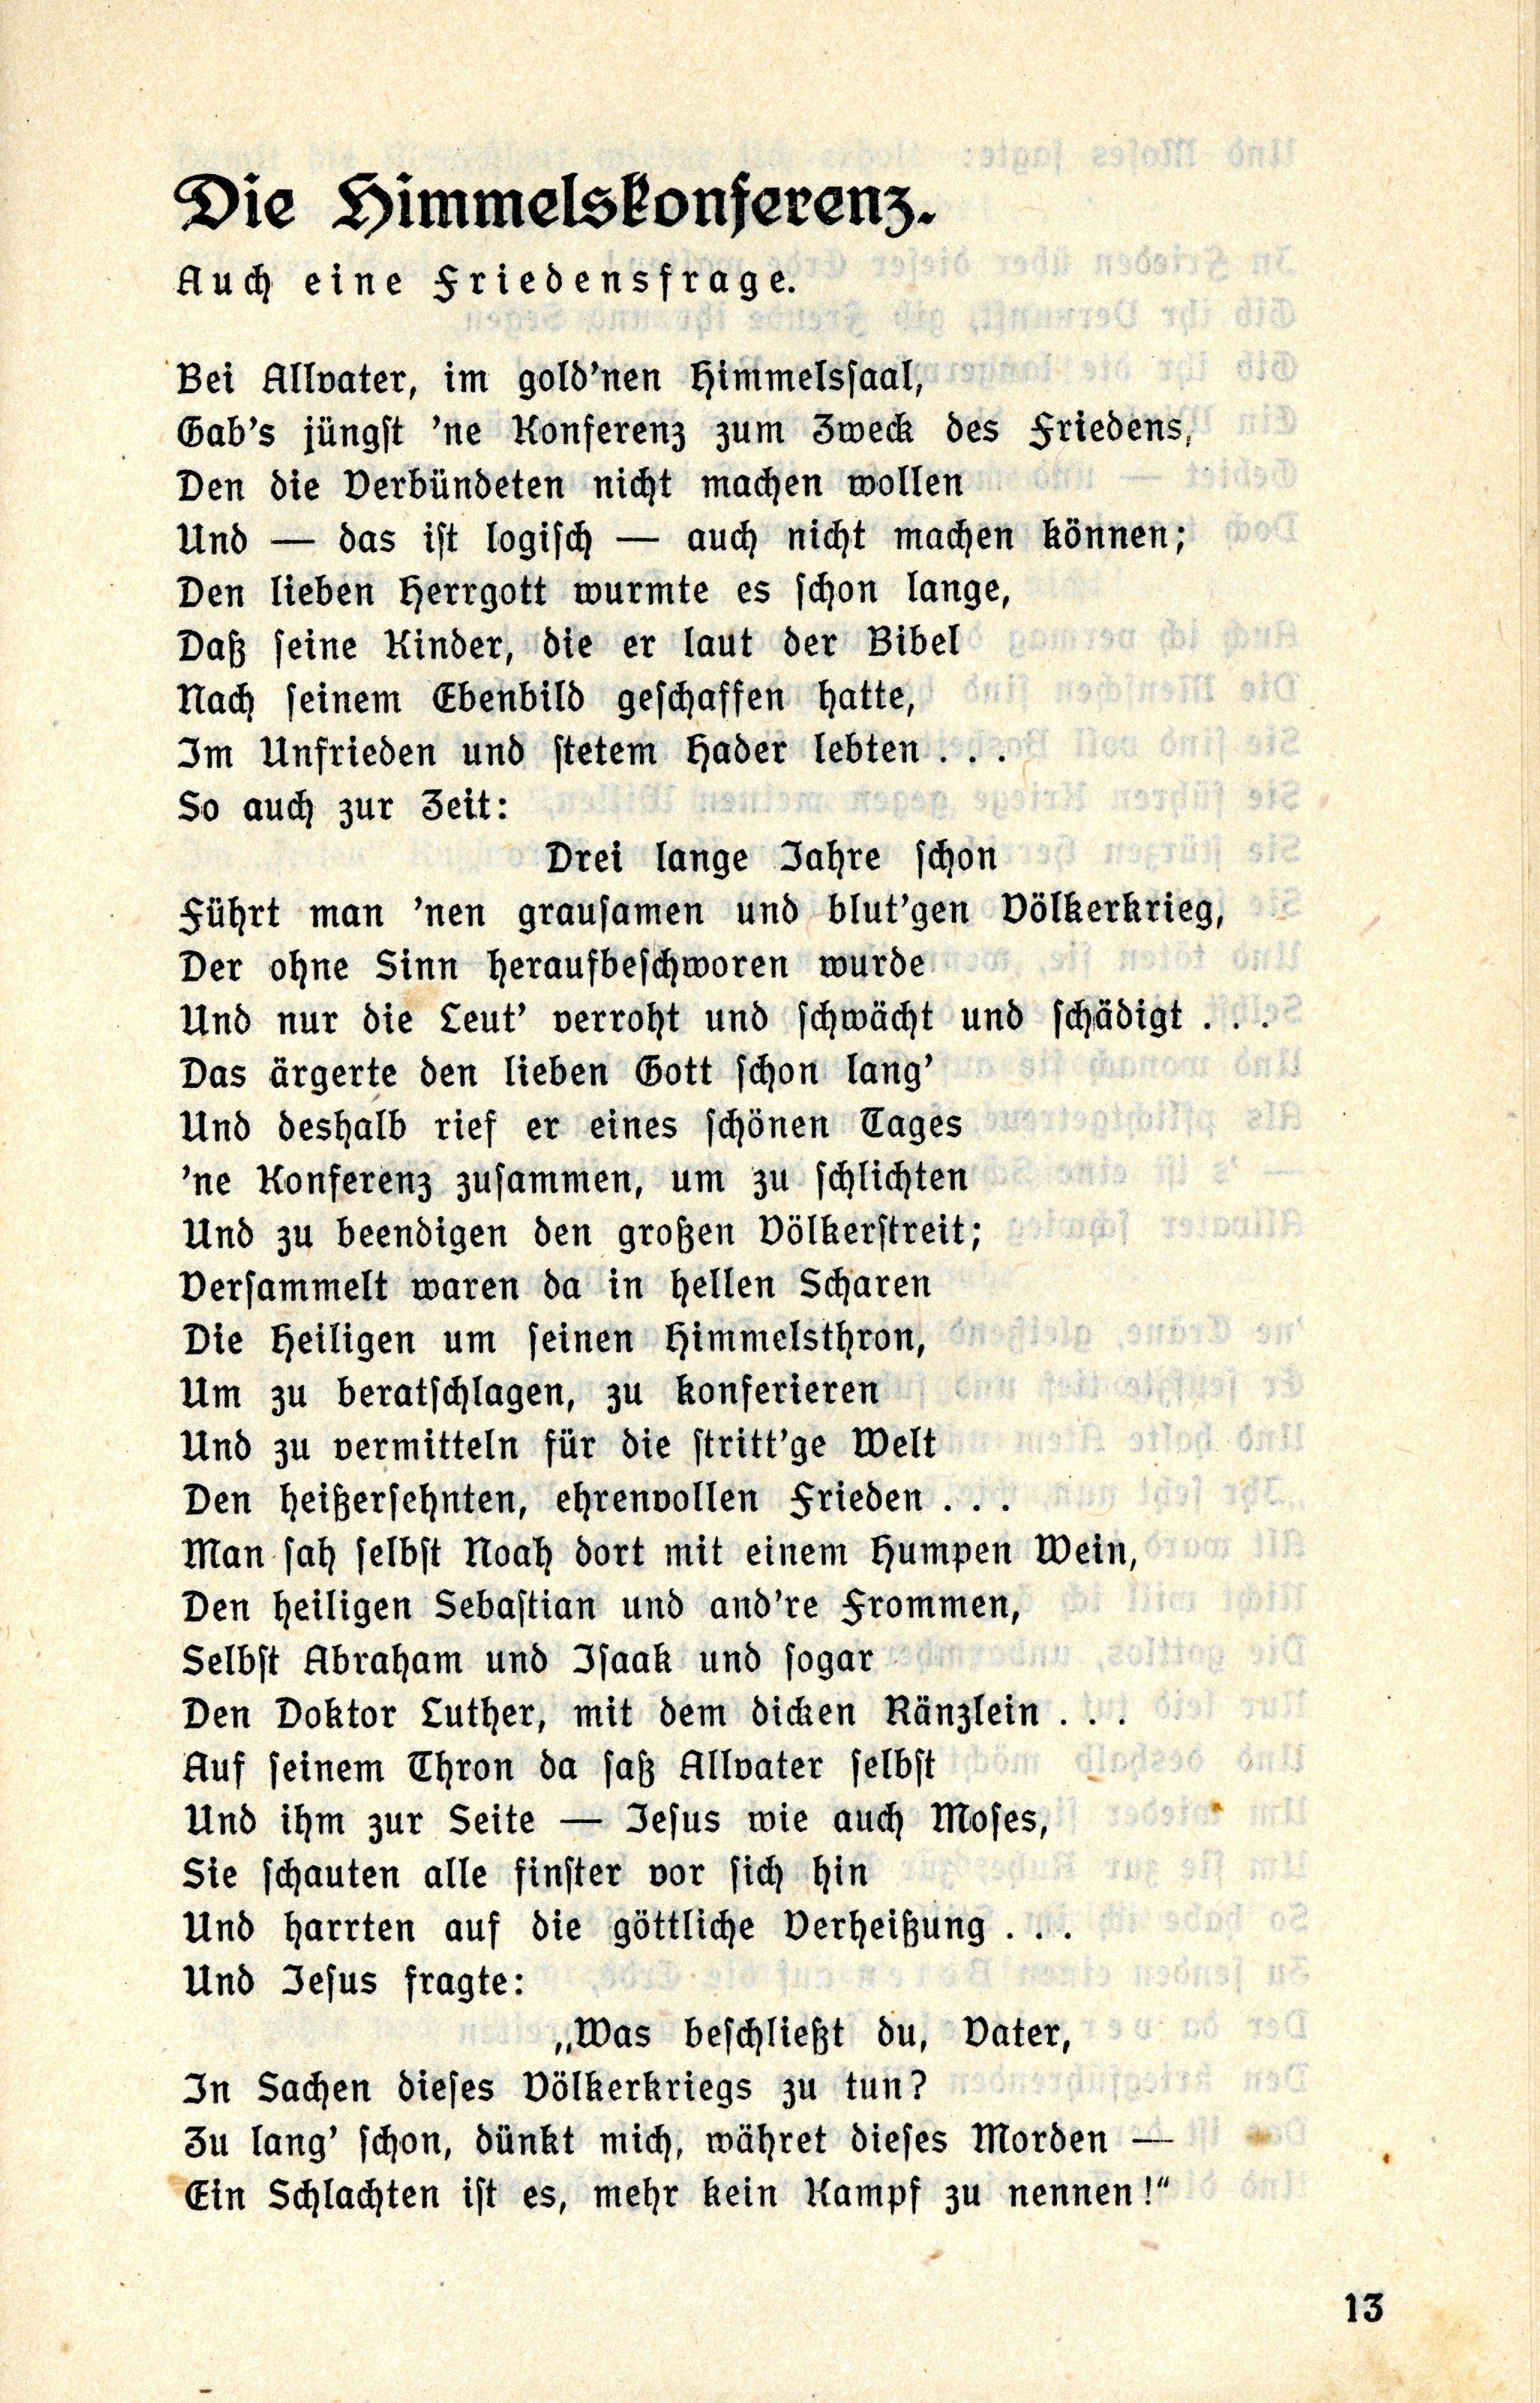 Der Balte im Maulkorb (1917) | 14. (13) Haupttext